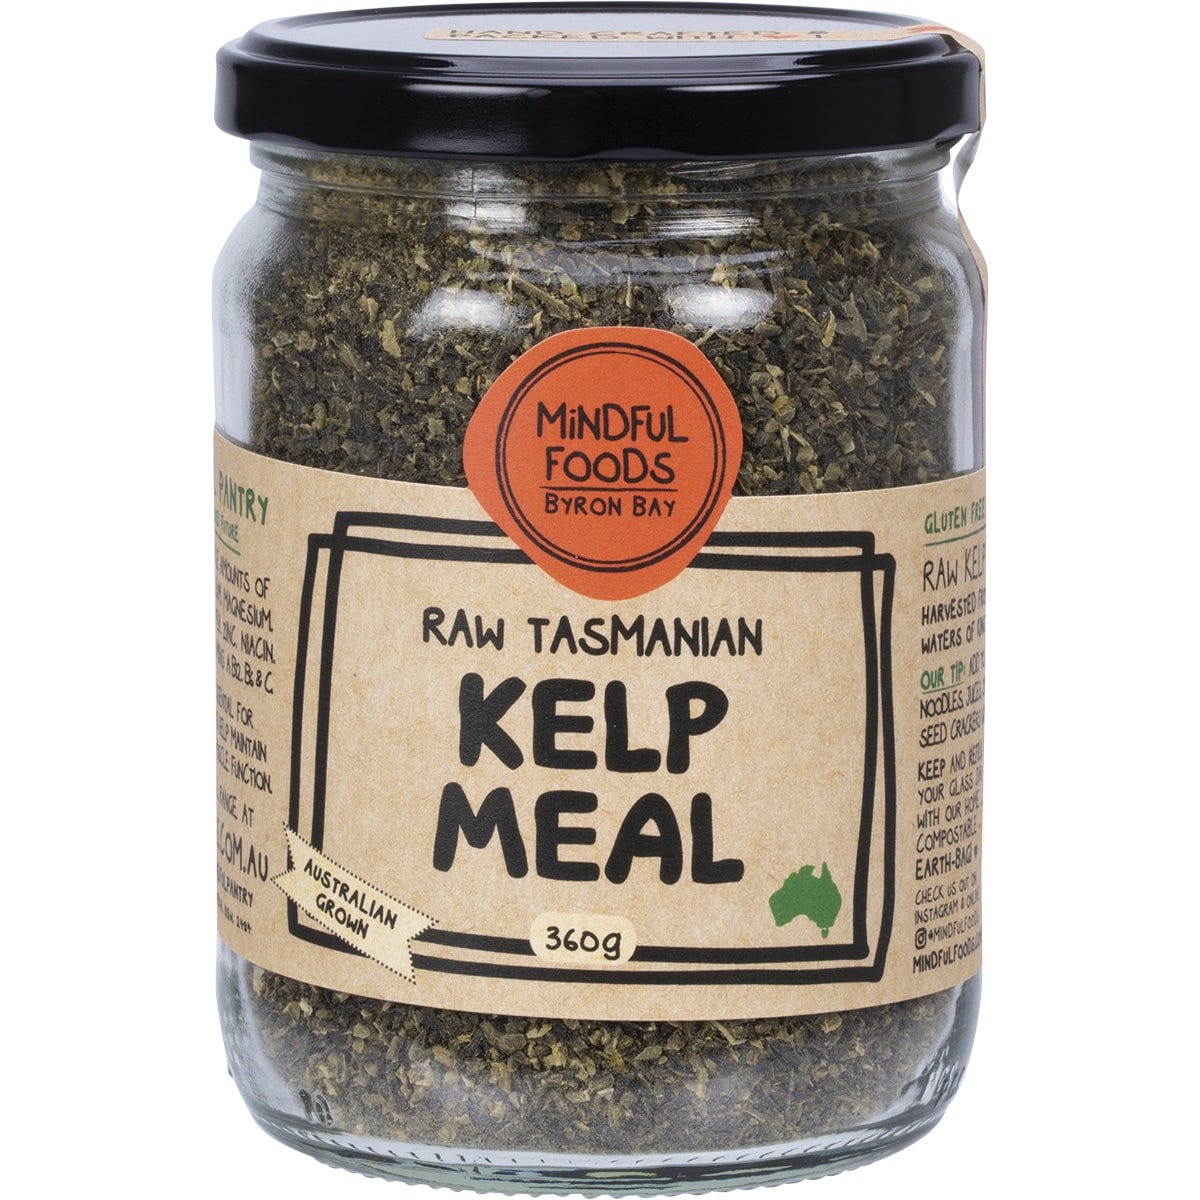 Mindful Foods Kelp Meal Raw Tasmanian 360g - Dr Earth - Seaweed